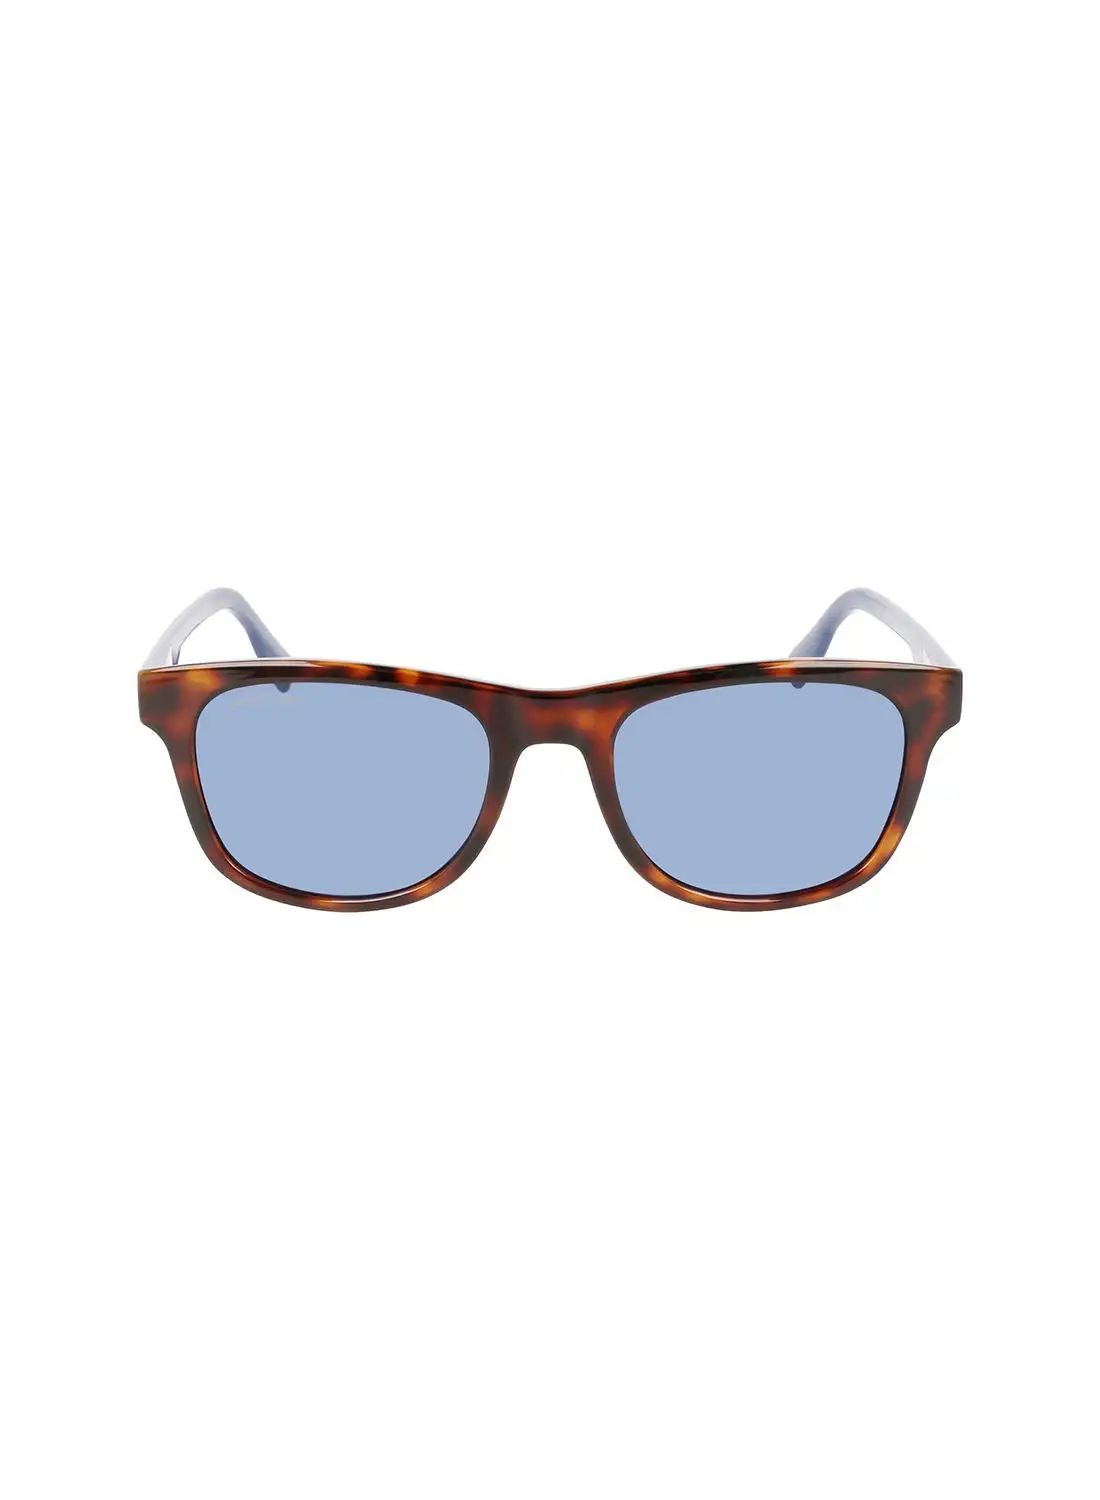 LACOSTE UV Rays Protection Eyewear Sunglasses L969S-230-5420